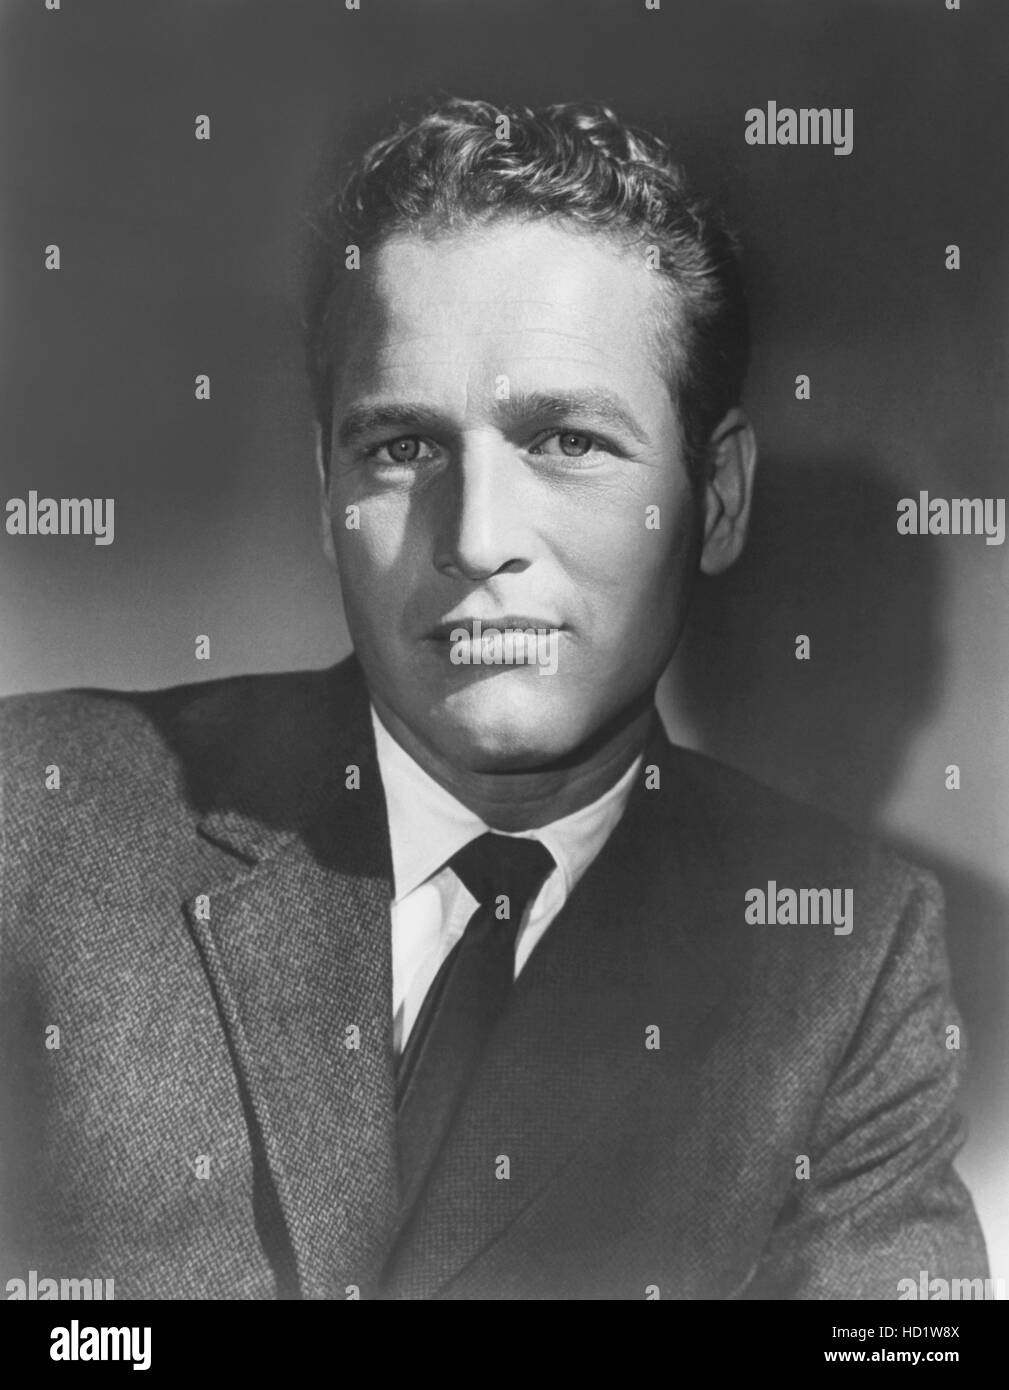 Paul Newman, 1963 Stock Photo - Alamy